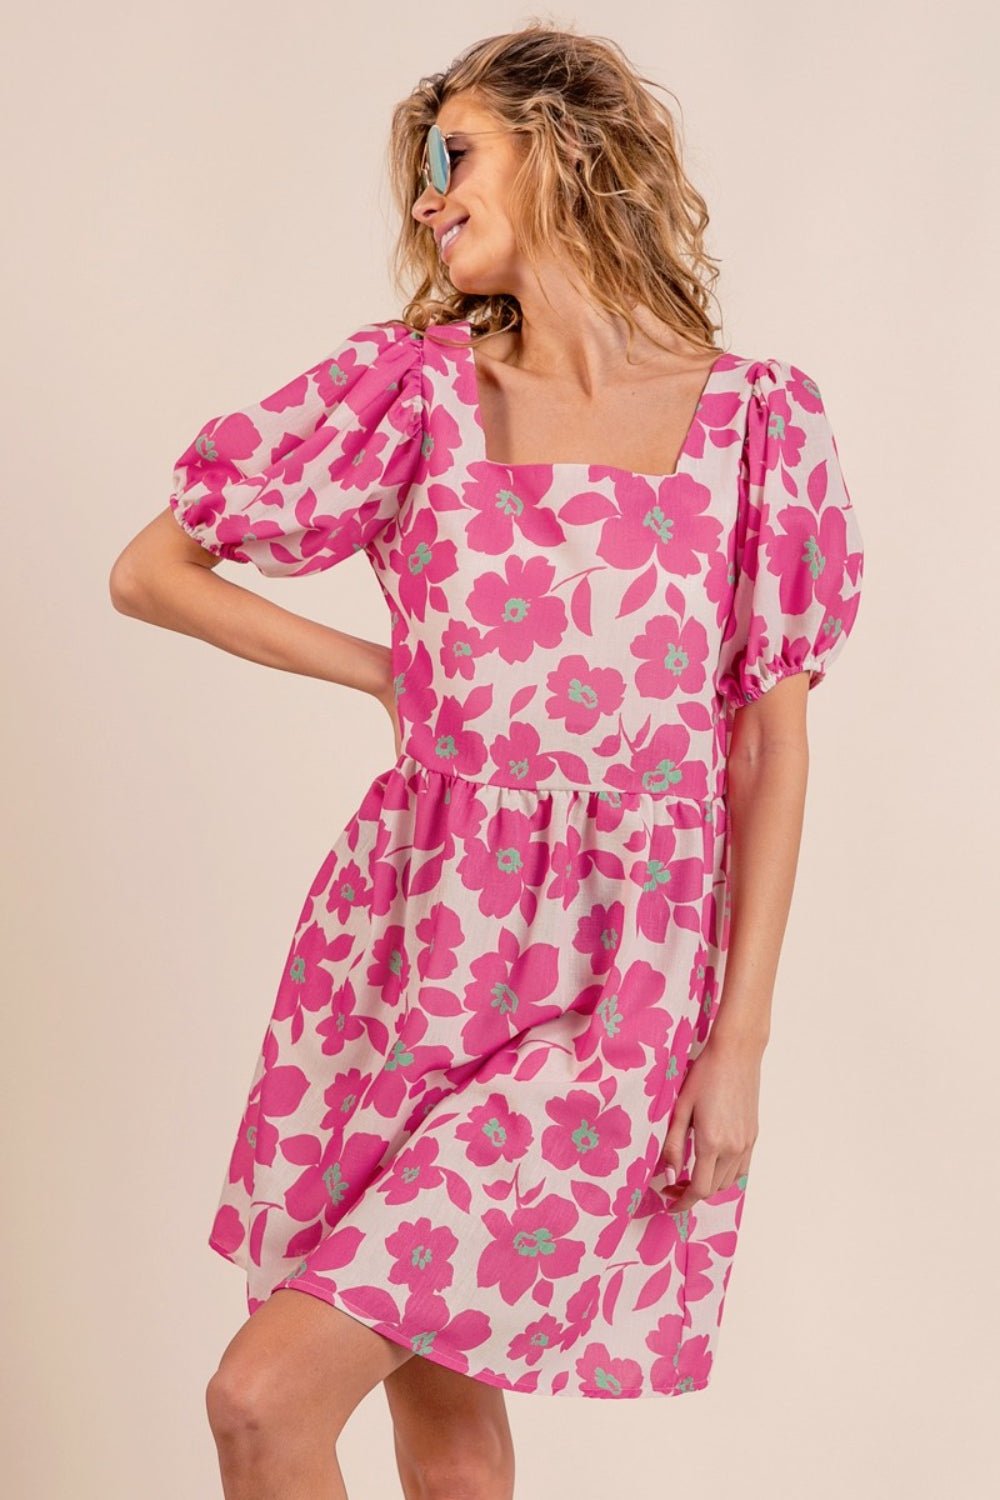 Floral Print Puff Sleeve Mini Dress in FuchsiaMini DressBiBi